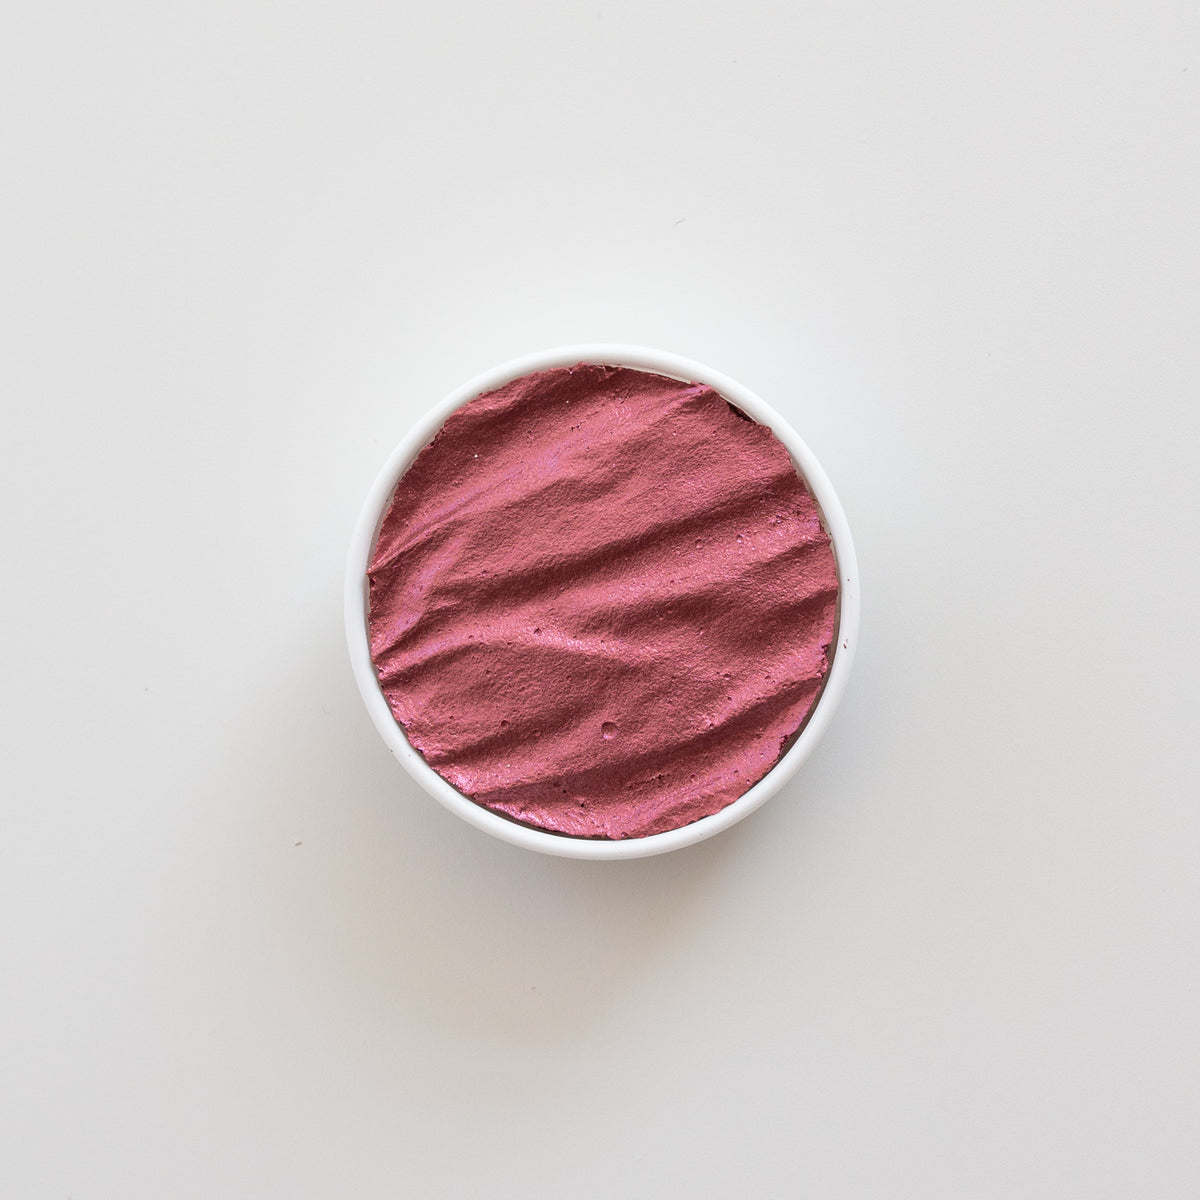 Coliro Pearlcolors M018 'Pink'